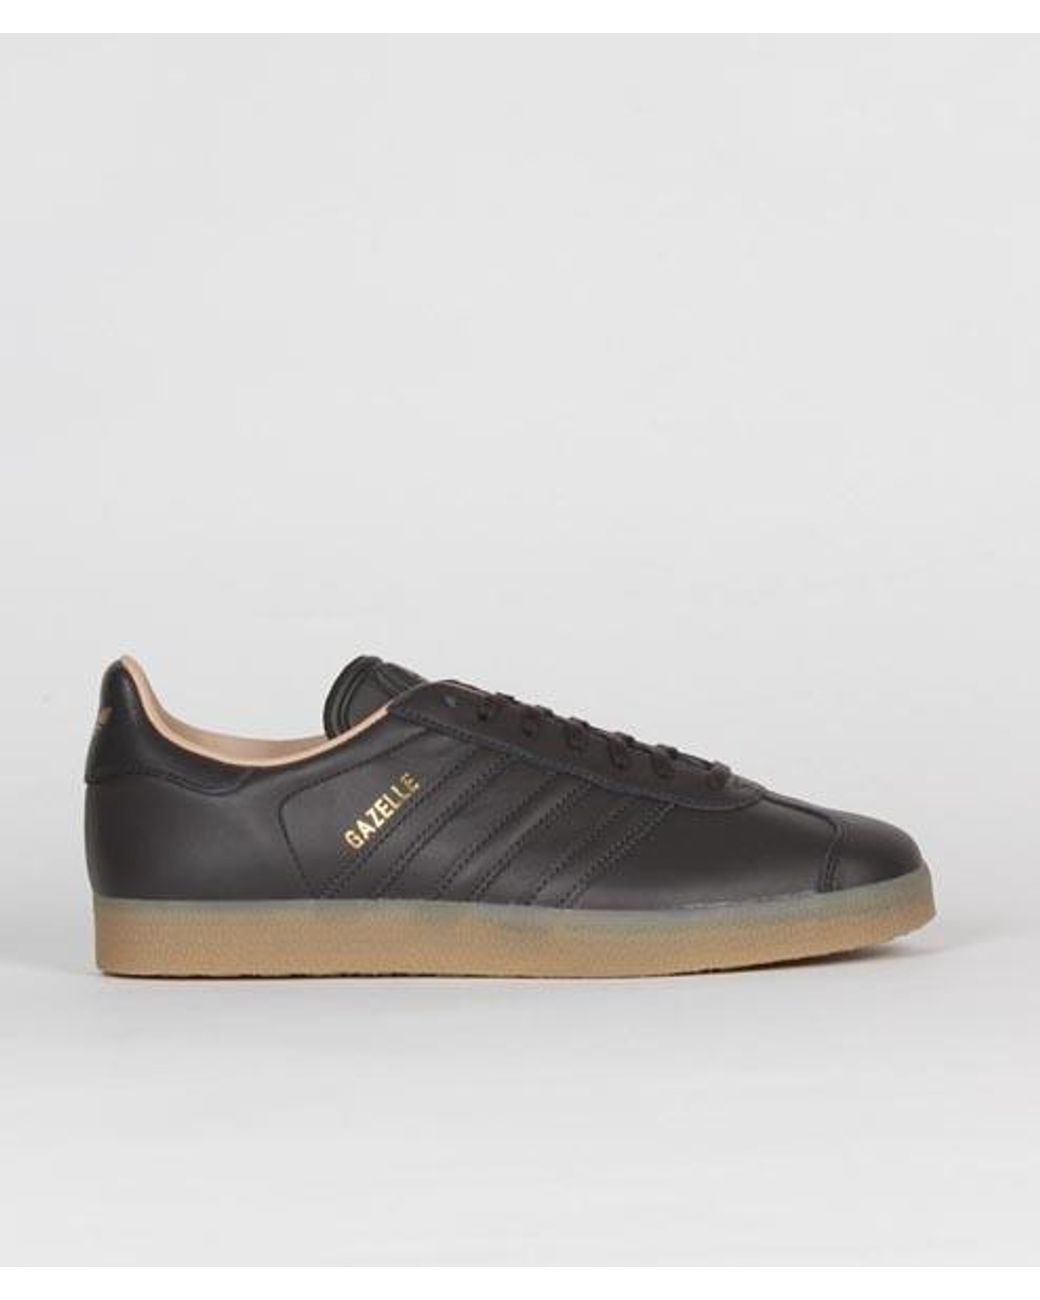 adidas Black Gum Gold Leather Originals Gazelle Shoes for Men | Lyst UK